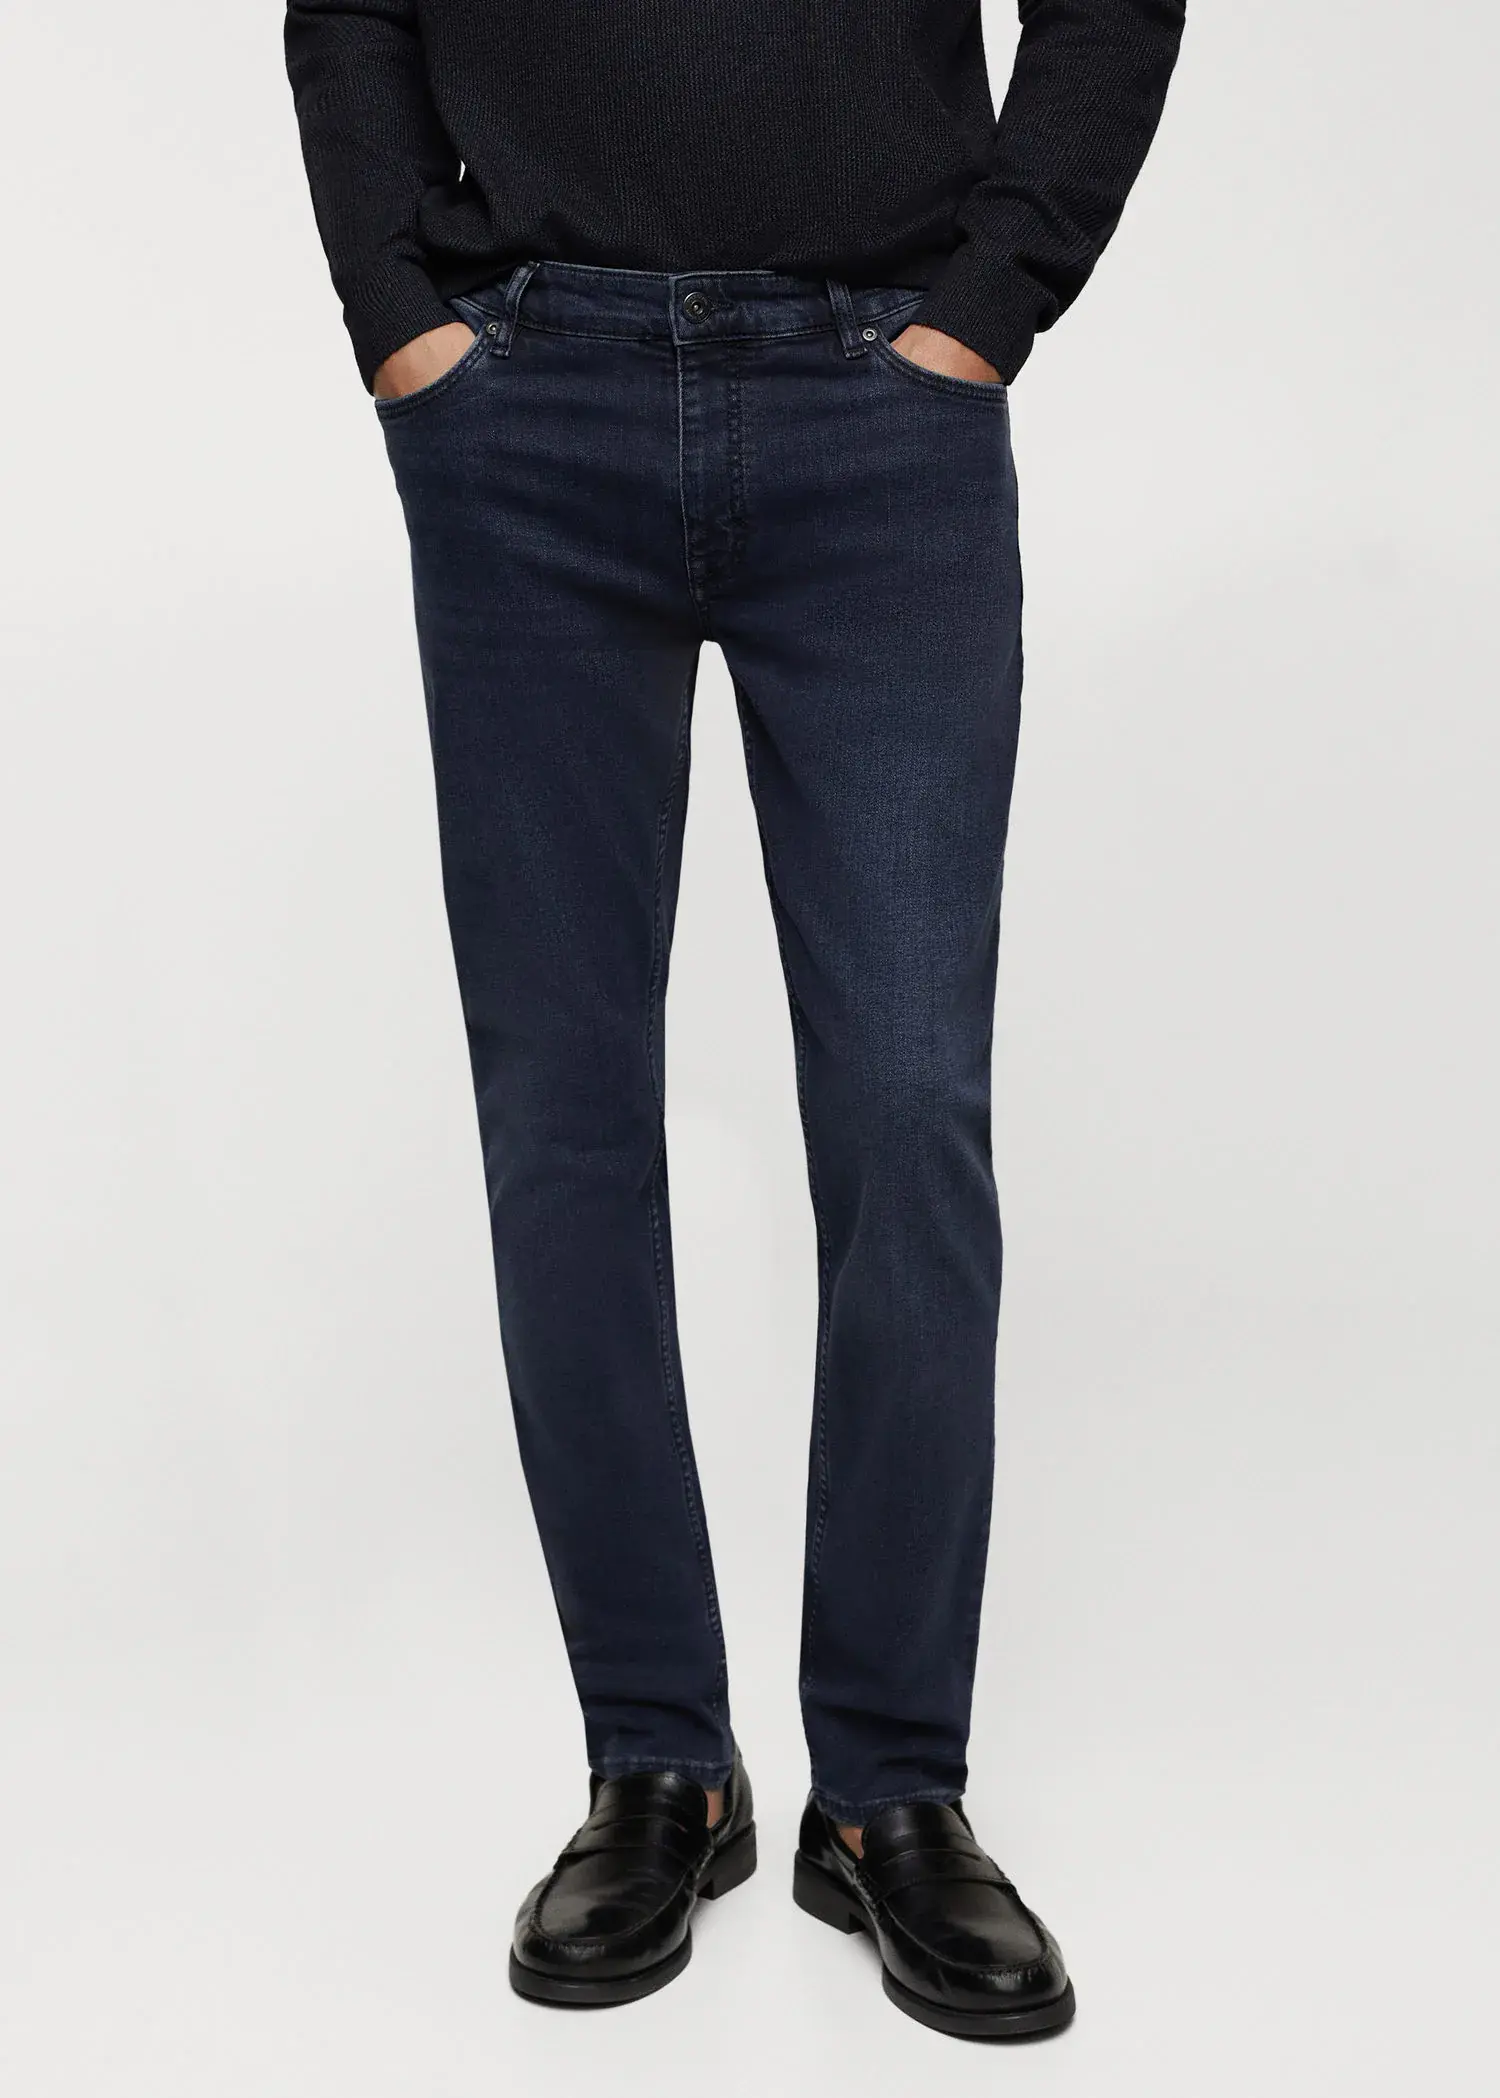 Mango Jude skinny-fit jeans. 2